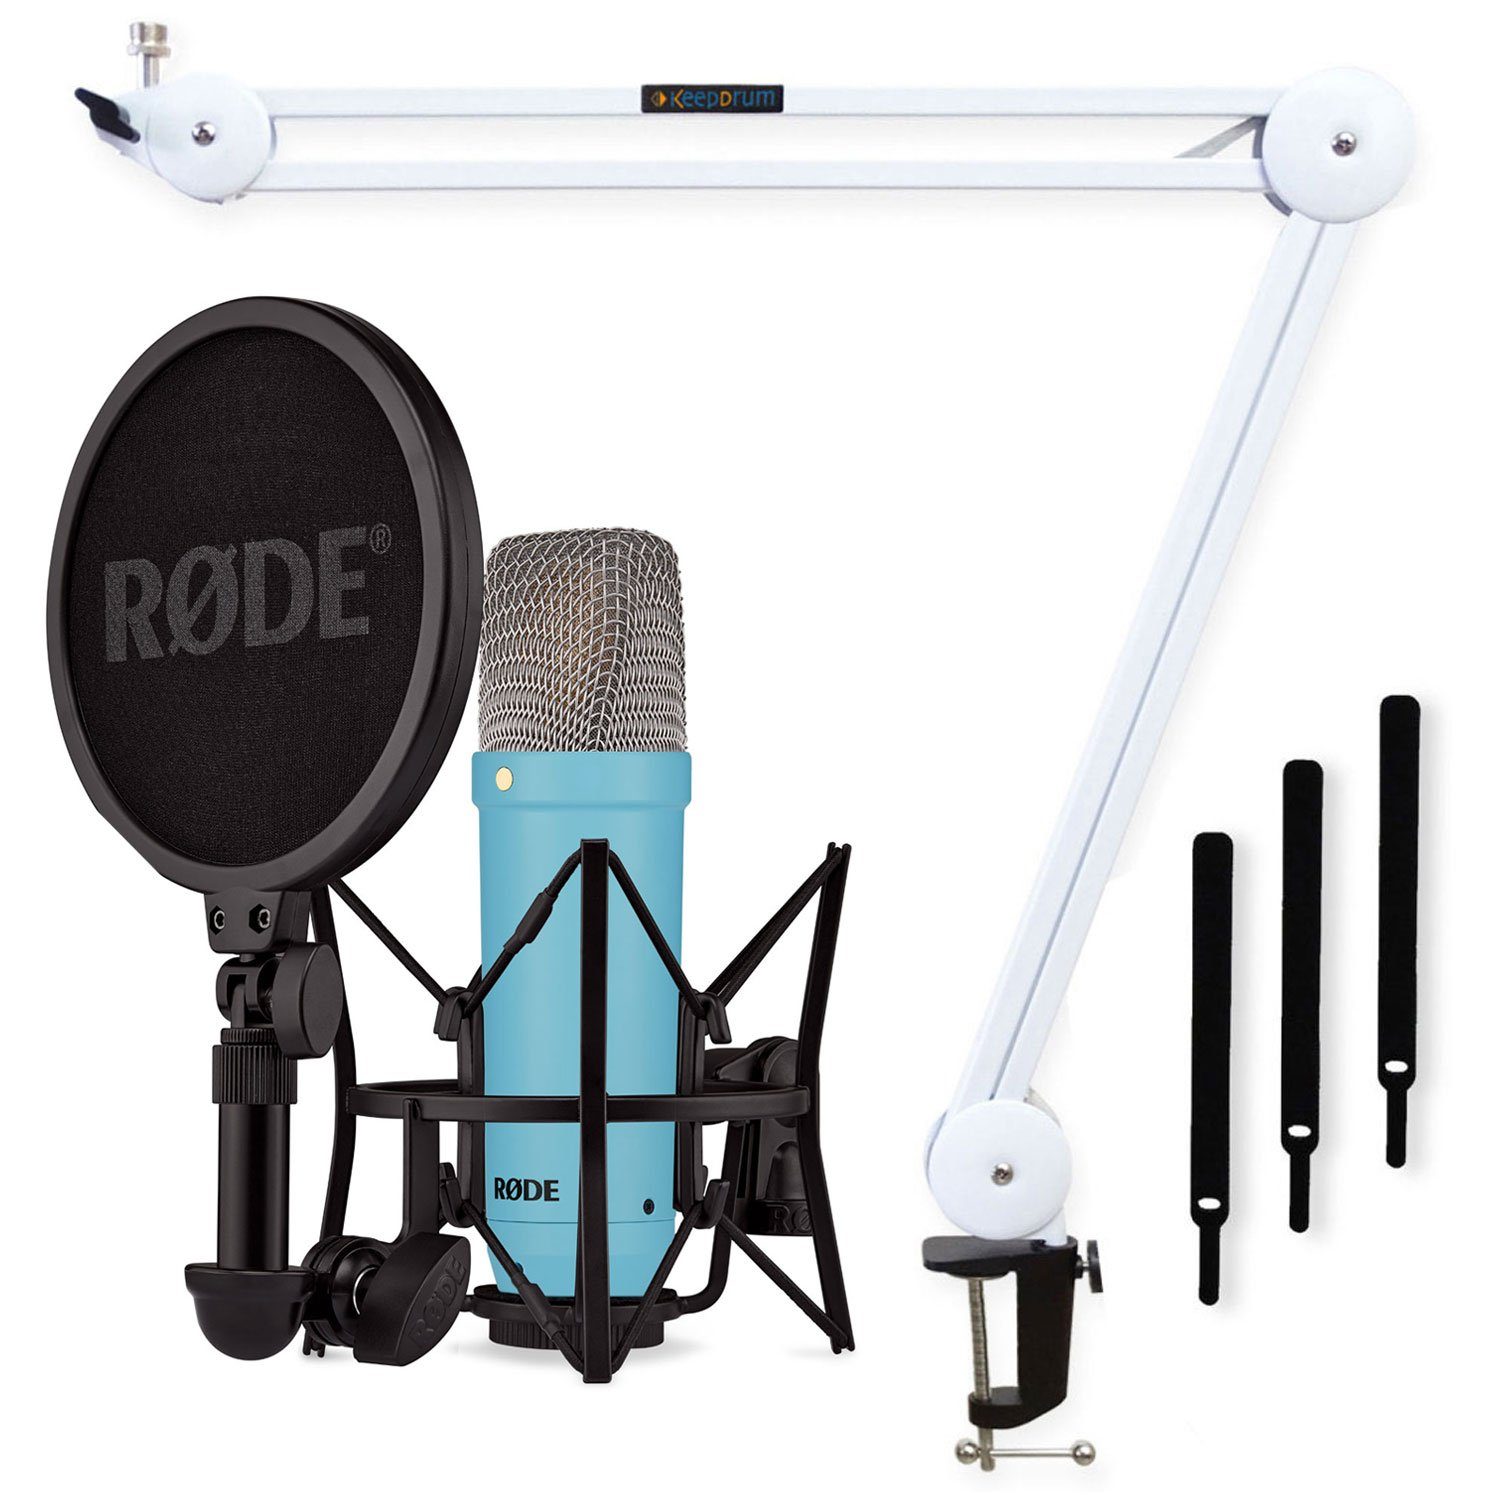 RØDE Mikrofon NT1 Signature Blue (Studio-Mikrofon Blau), mit Gelenkarm Weiss